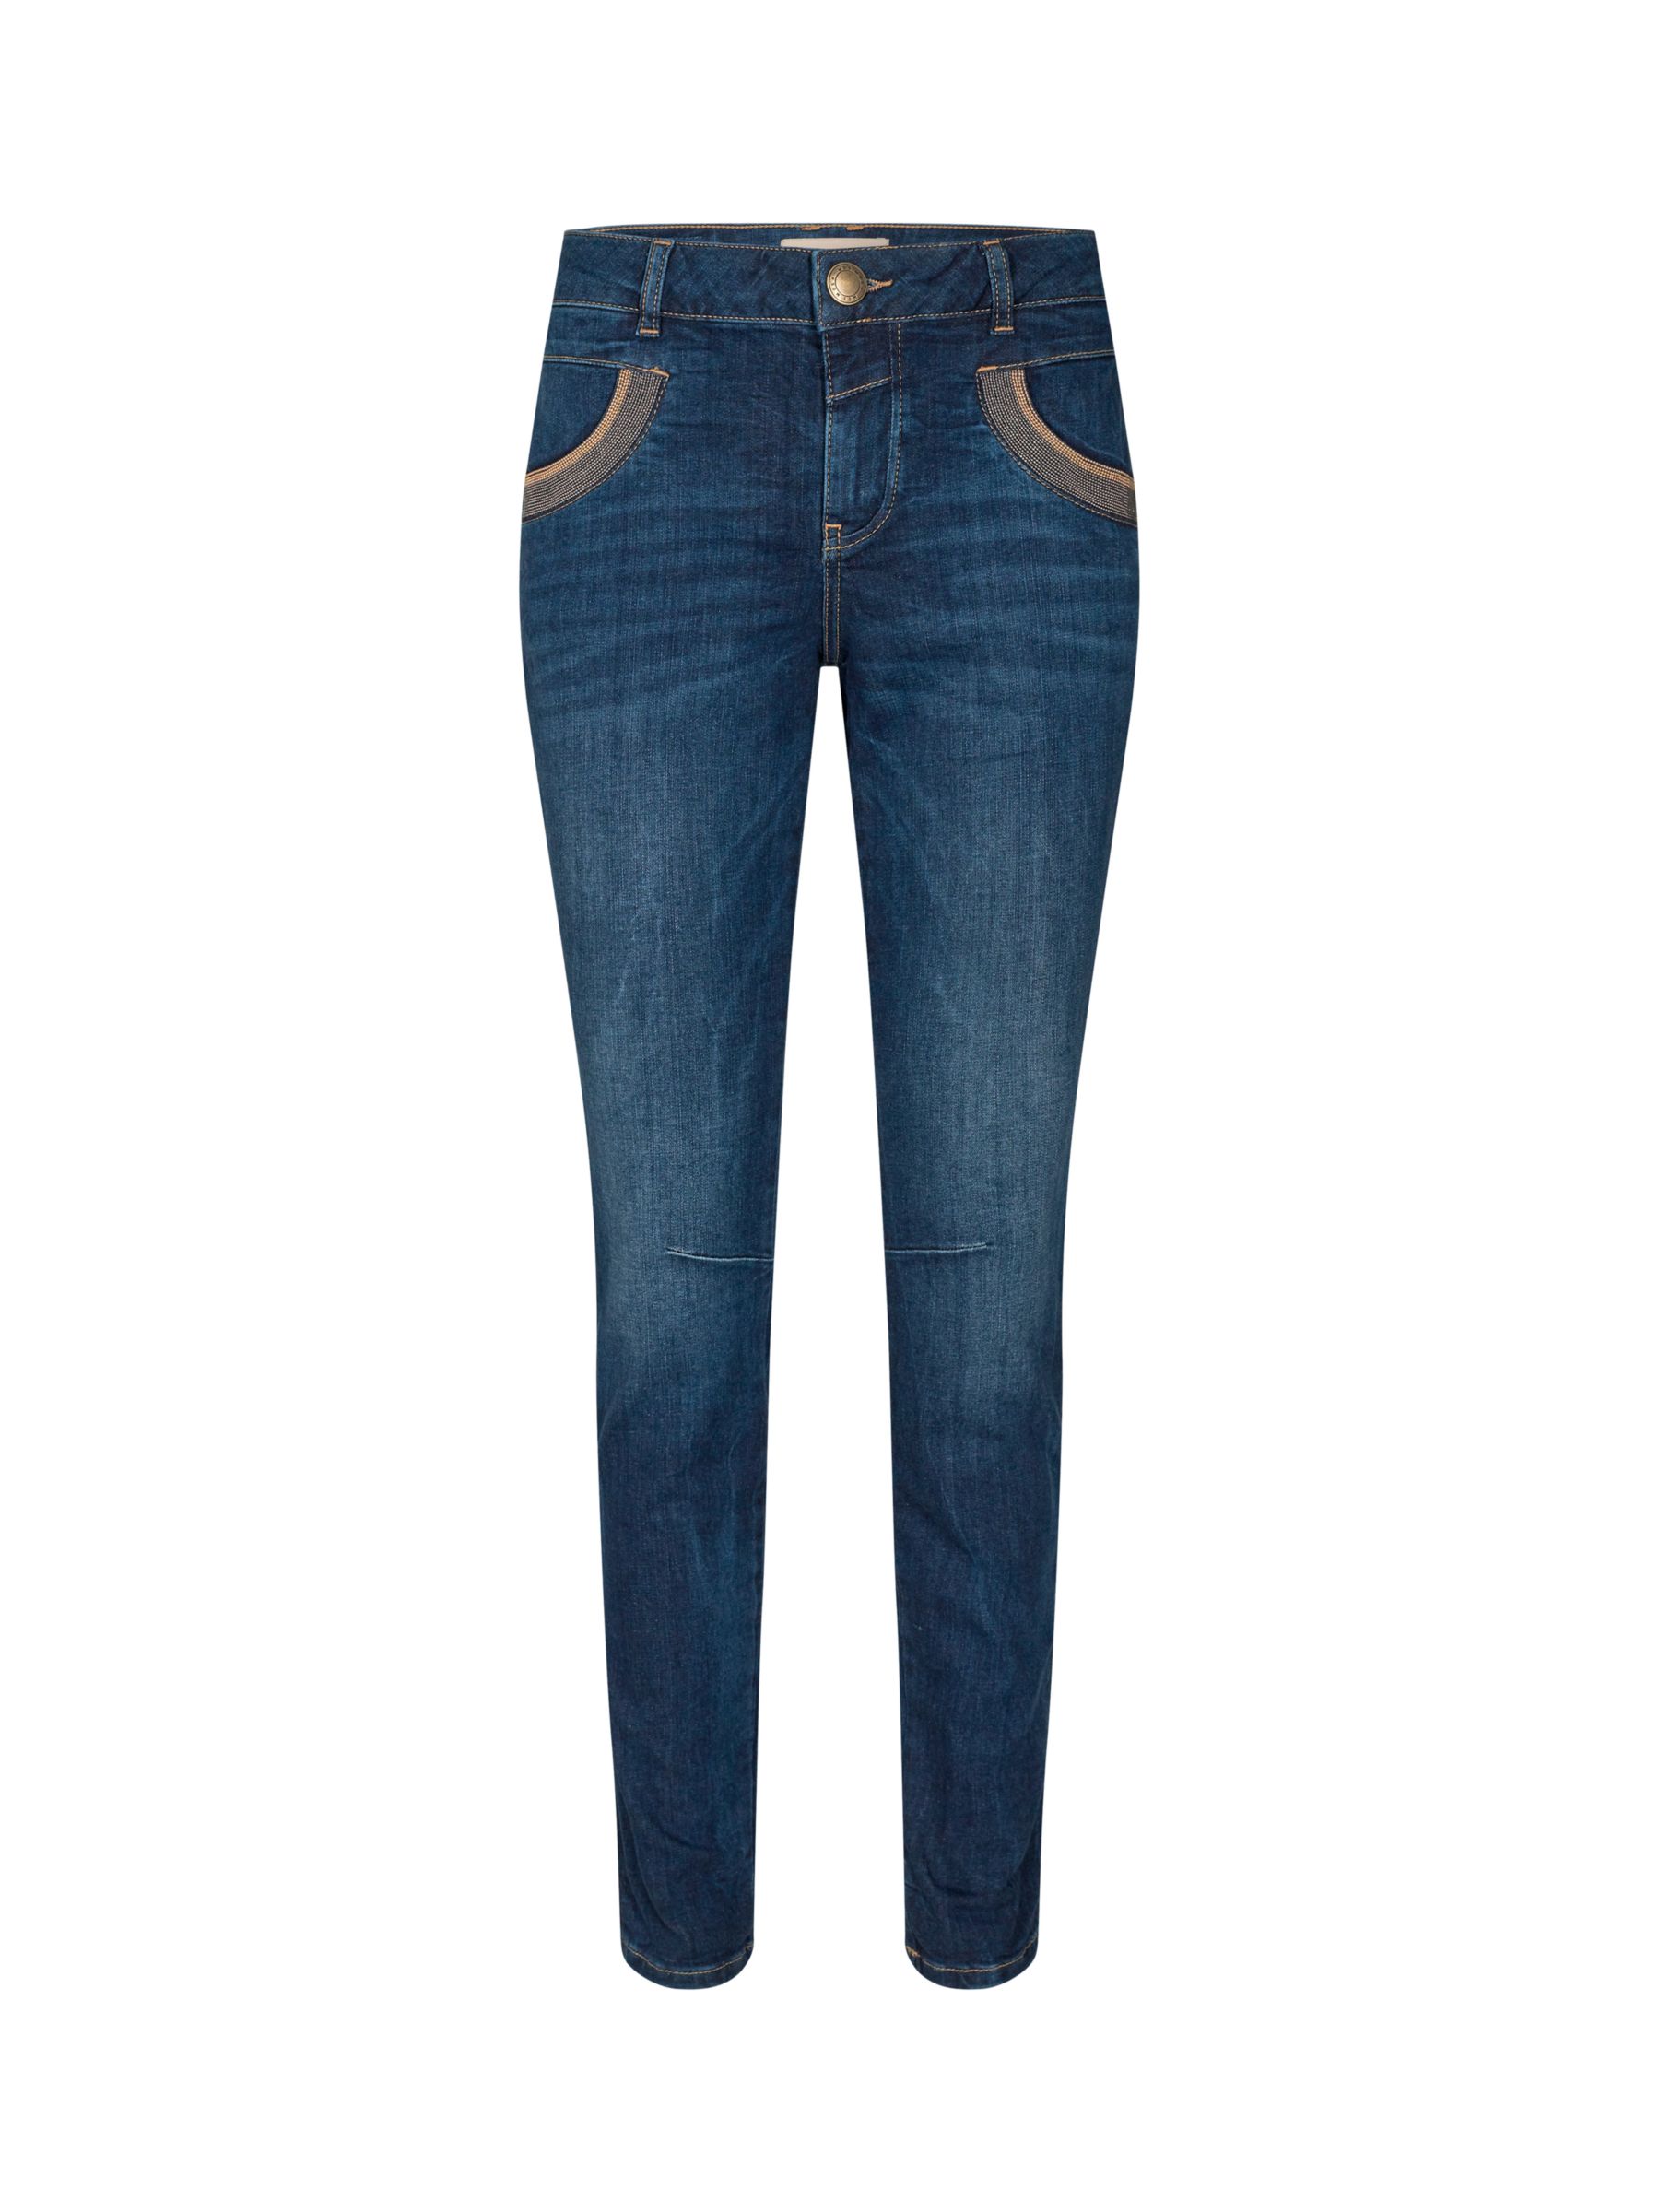 MOS MOSH Naomi Pocket Detail Jeans, Blue, 25R